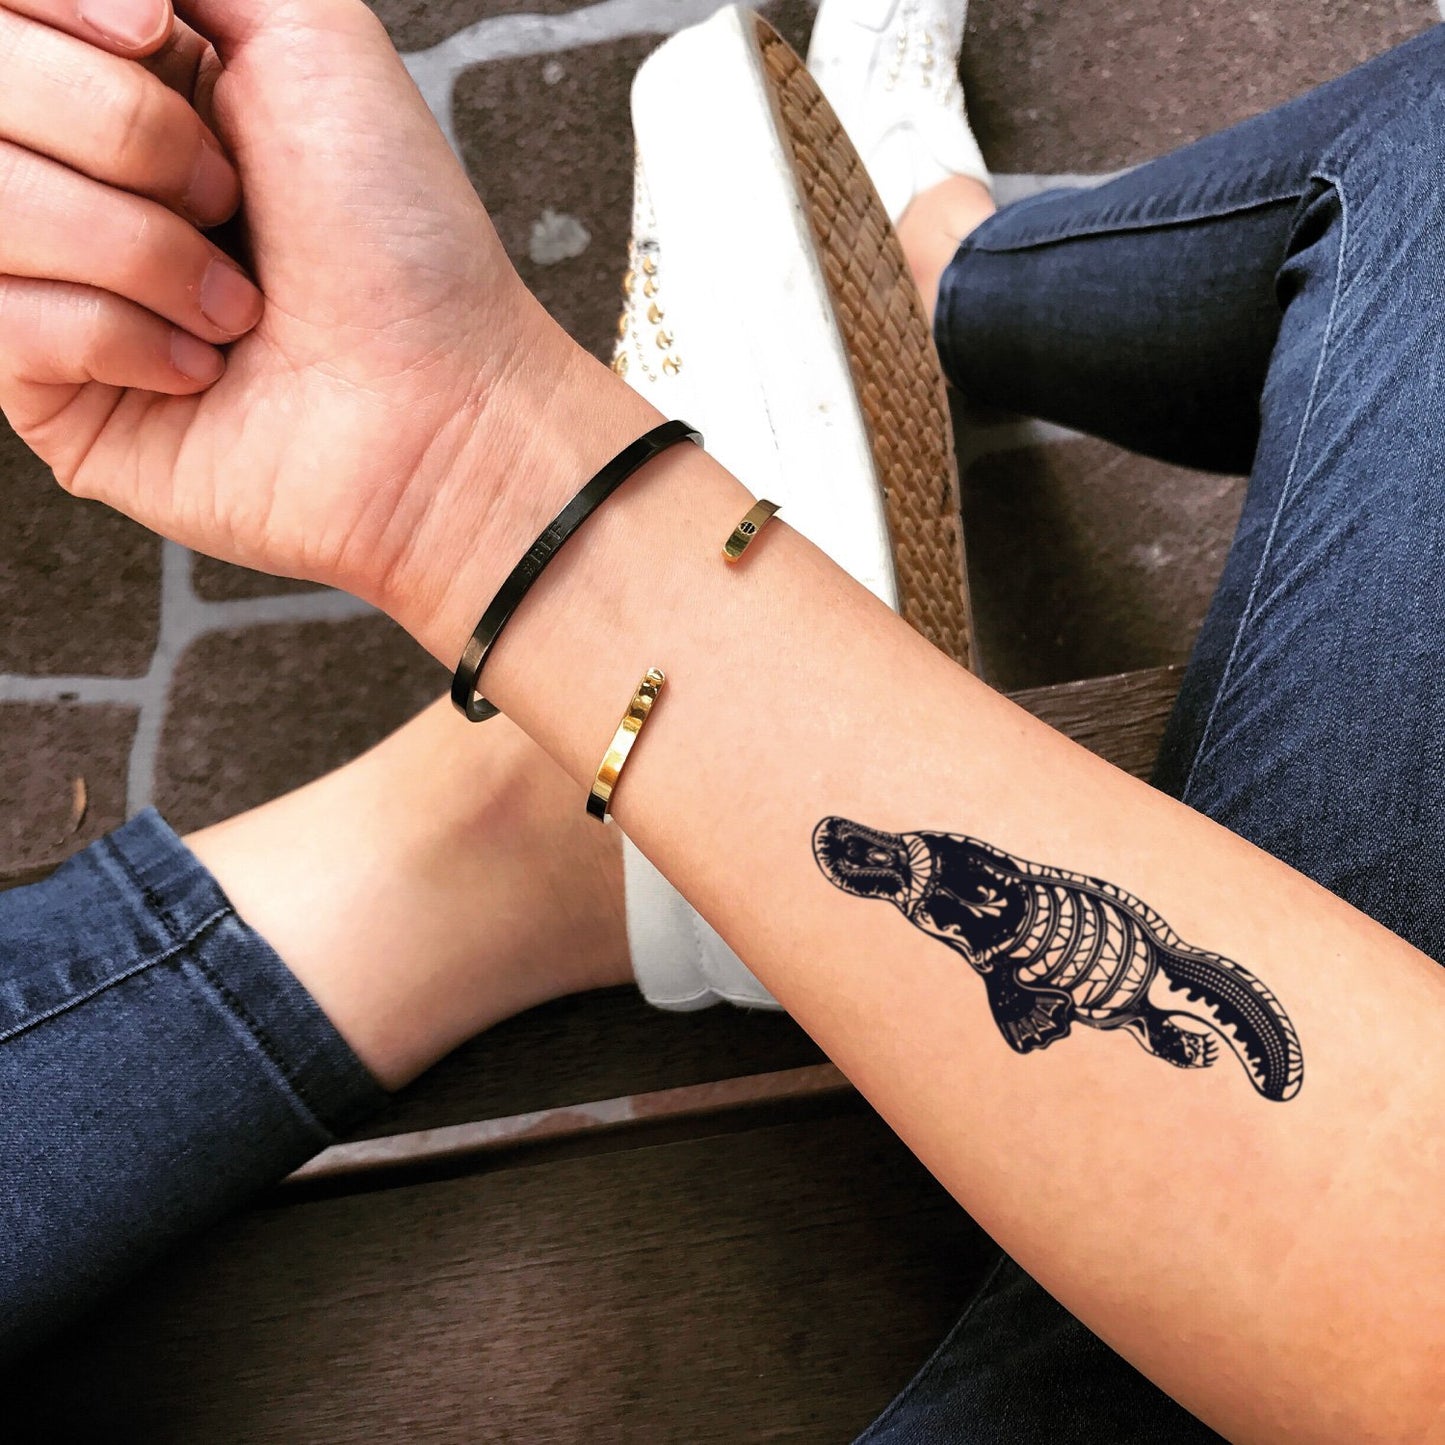 fake medium platypus animal temporary tattoo sticker design idea on forearm